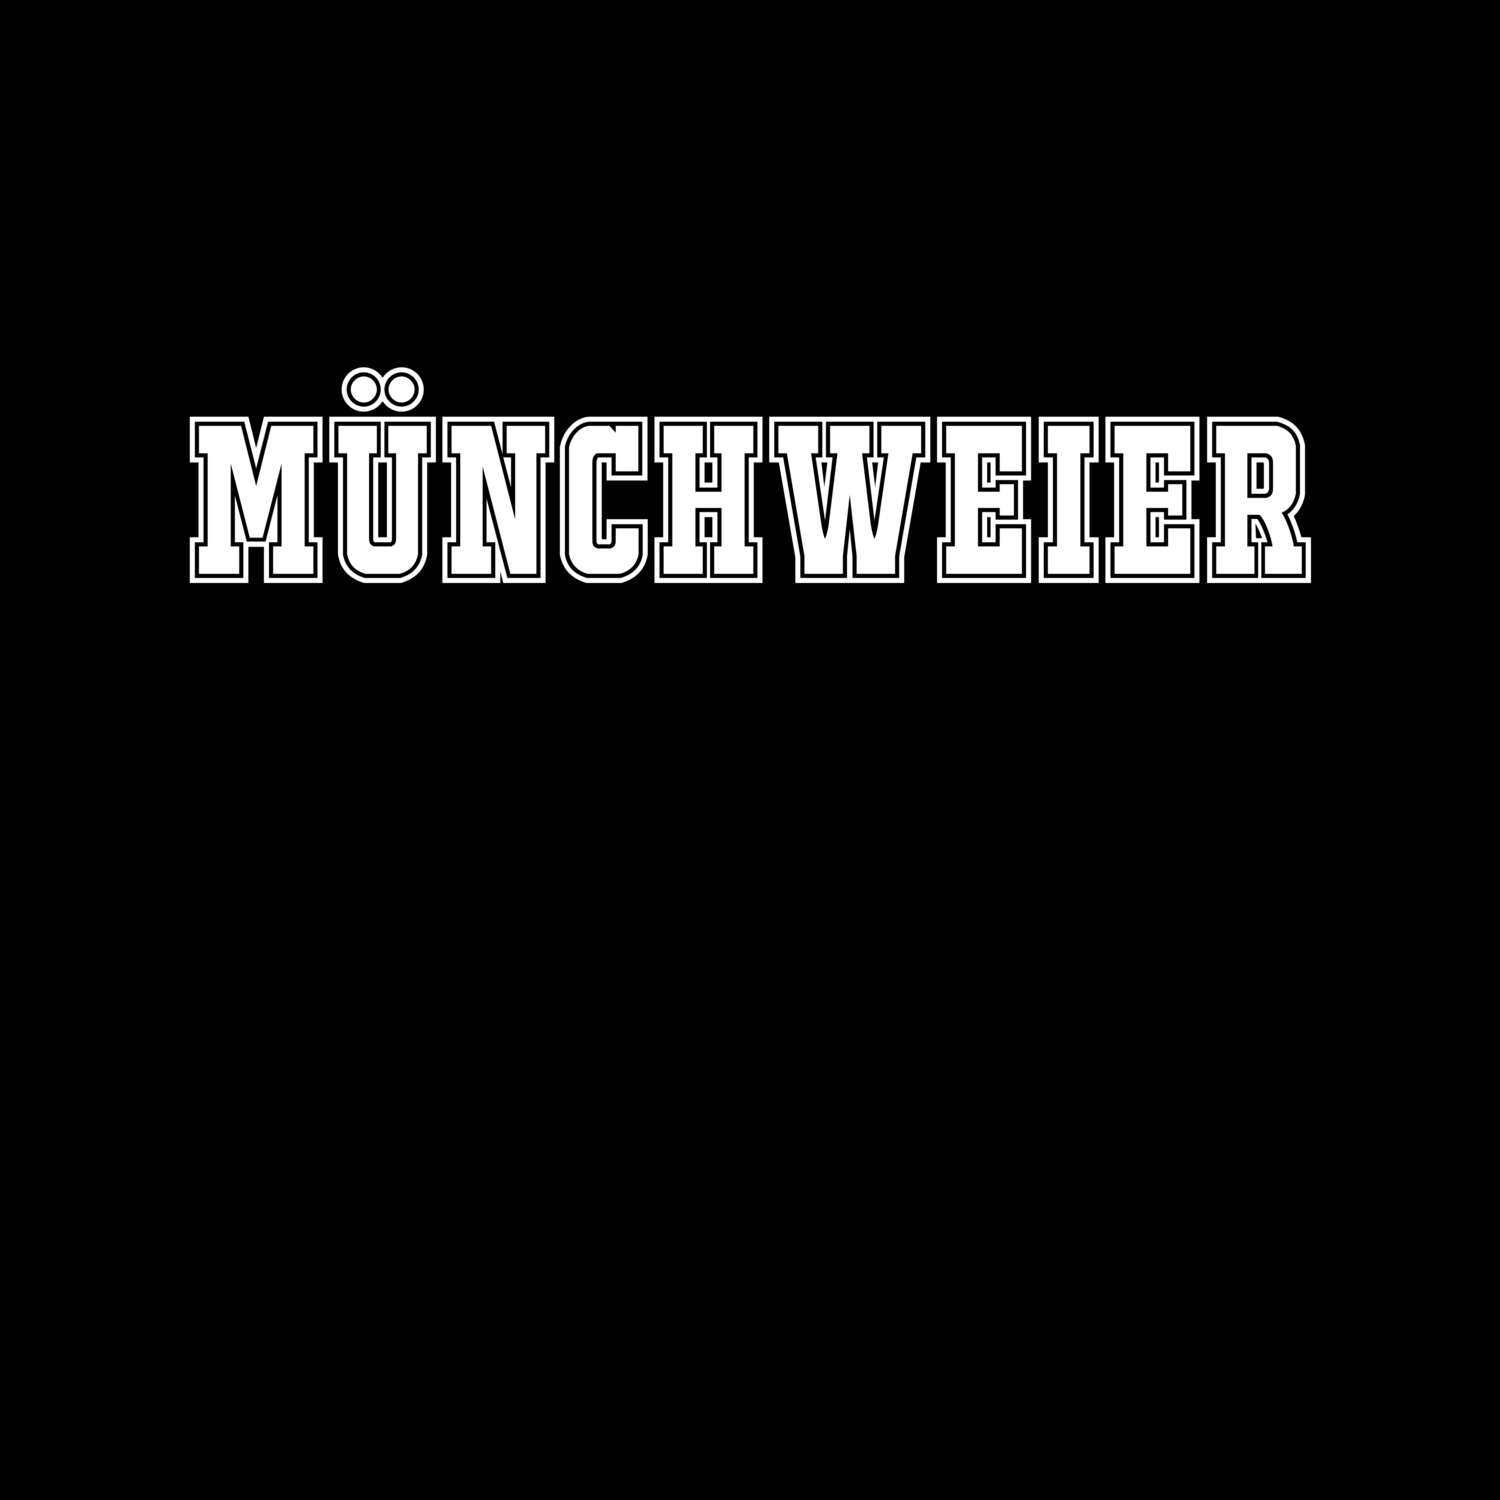 Münchweier T-Shirt »Classic«